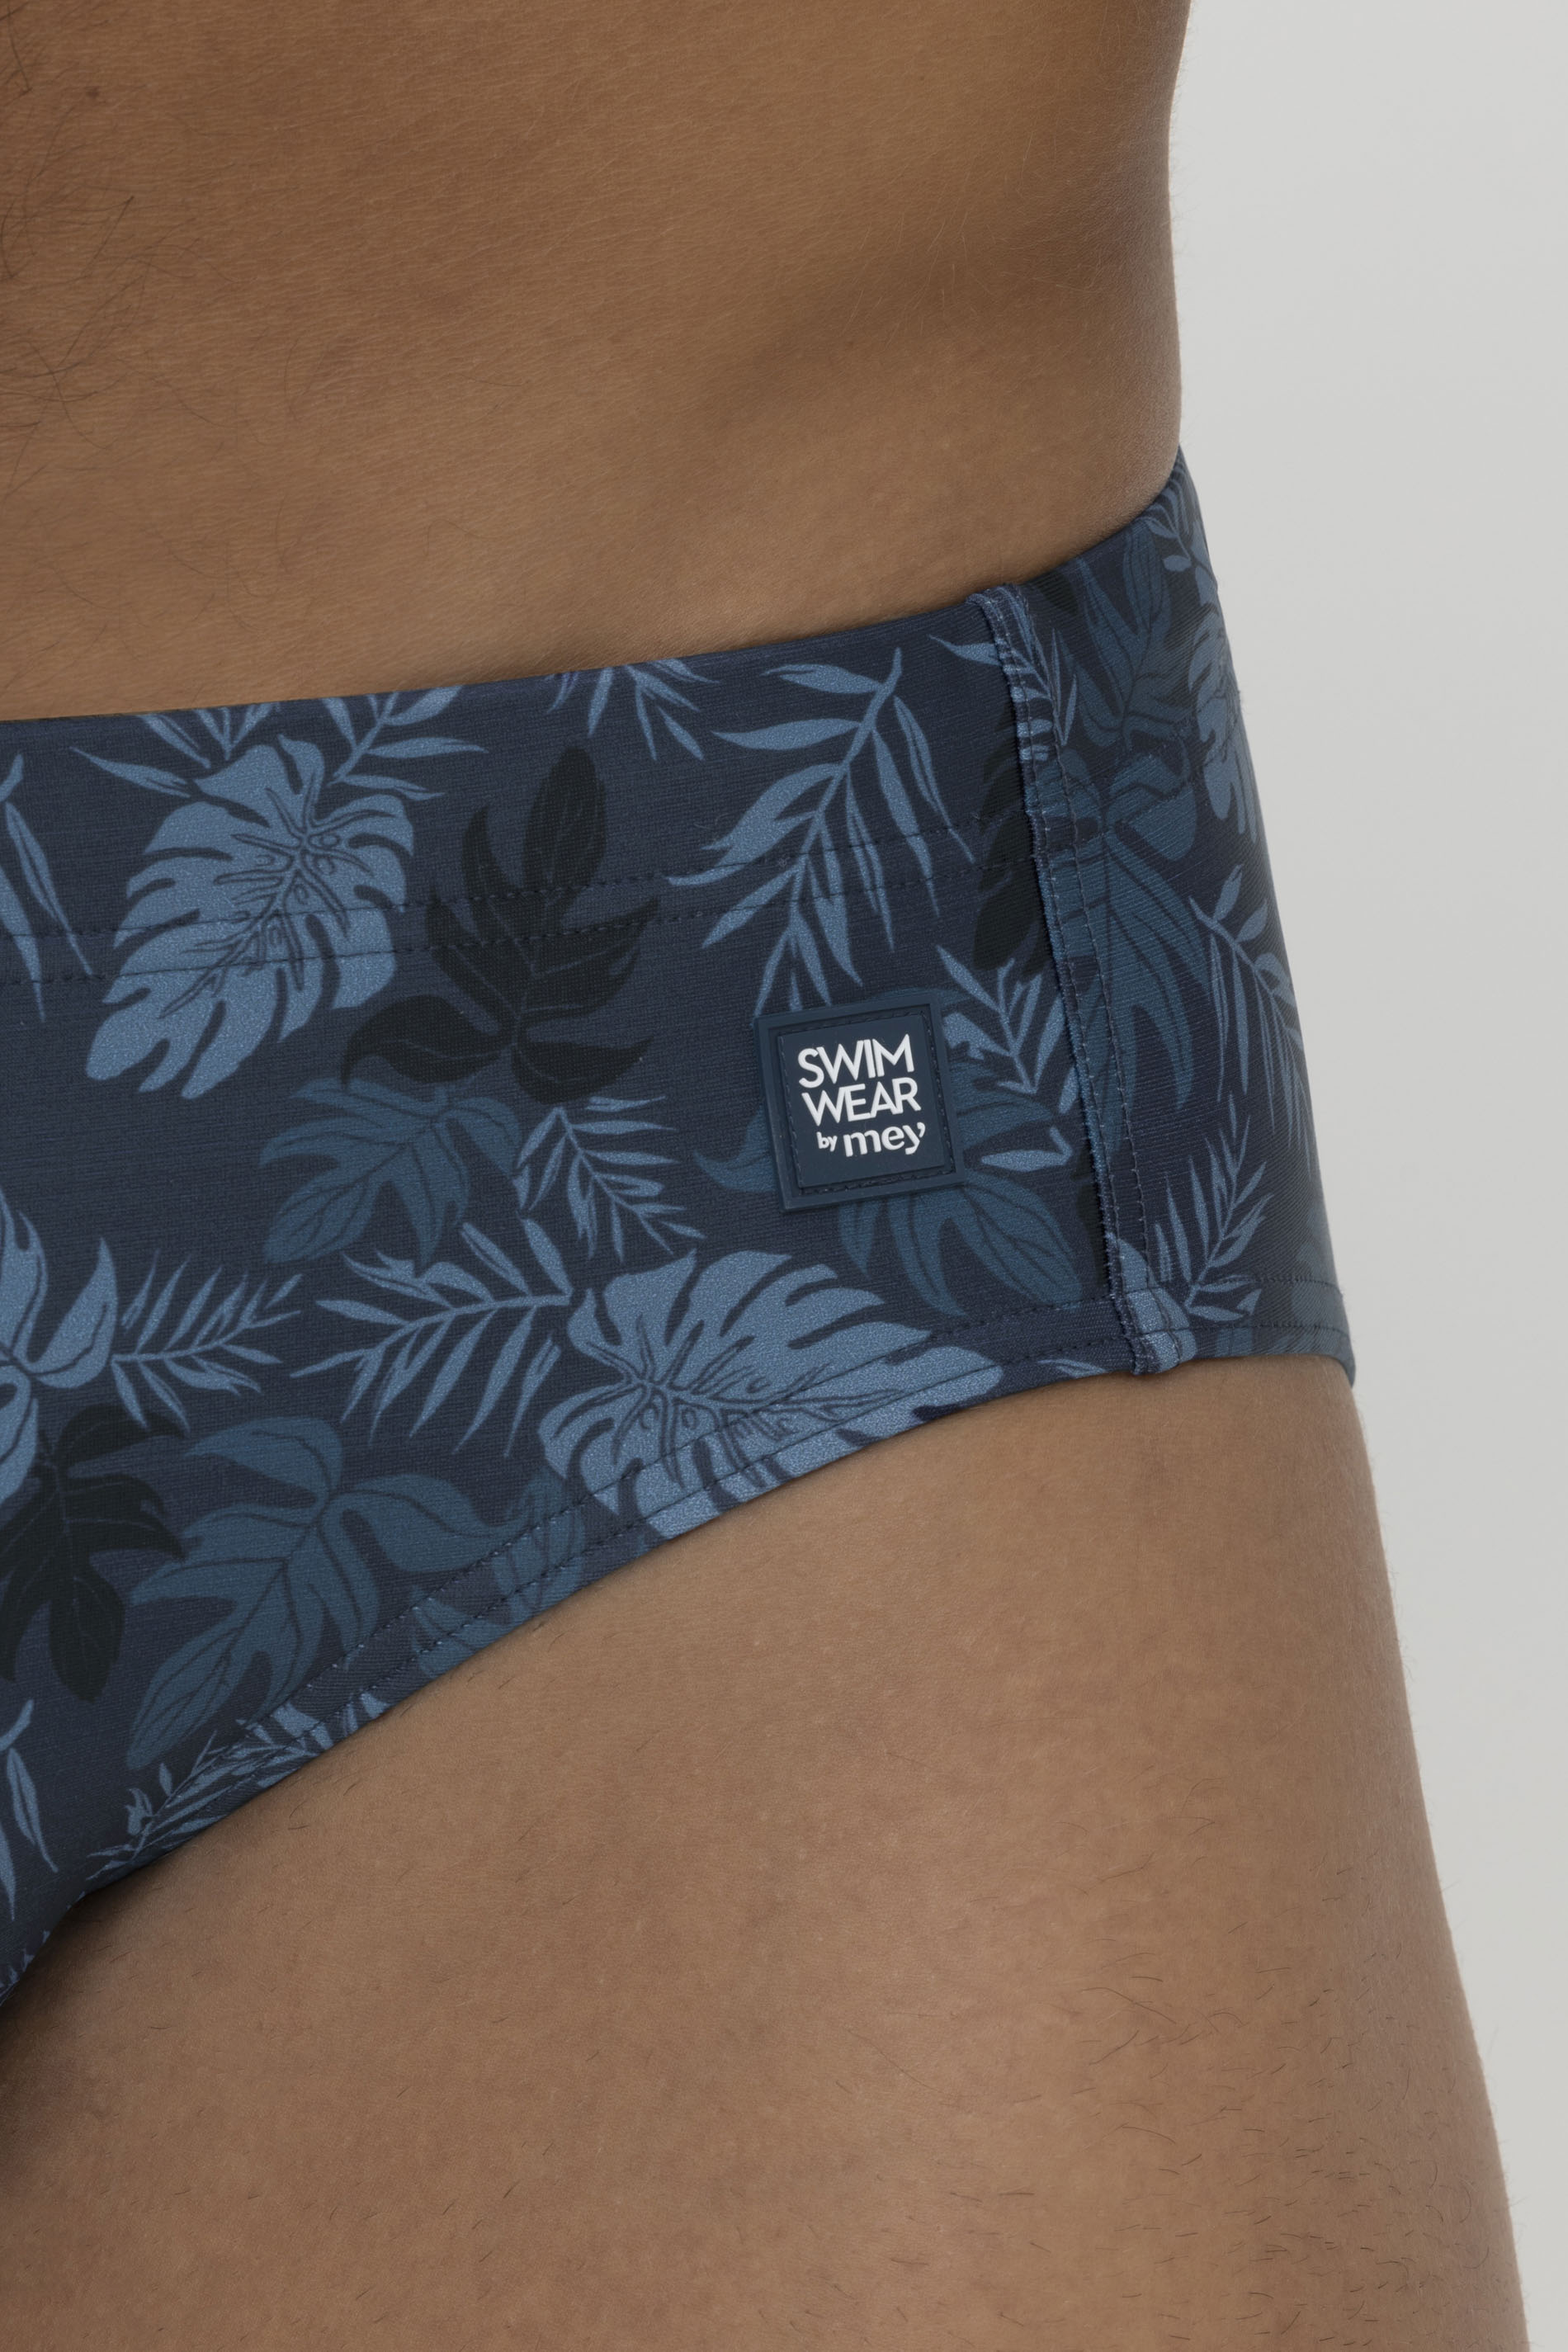 Swim shorts Serie Tonal Tropical Detail View 01 | mey®